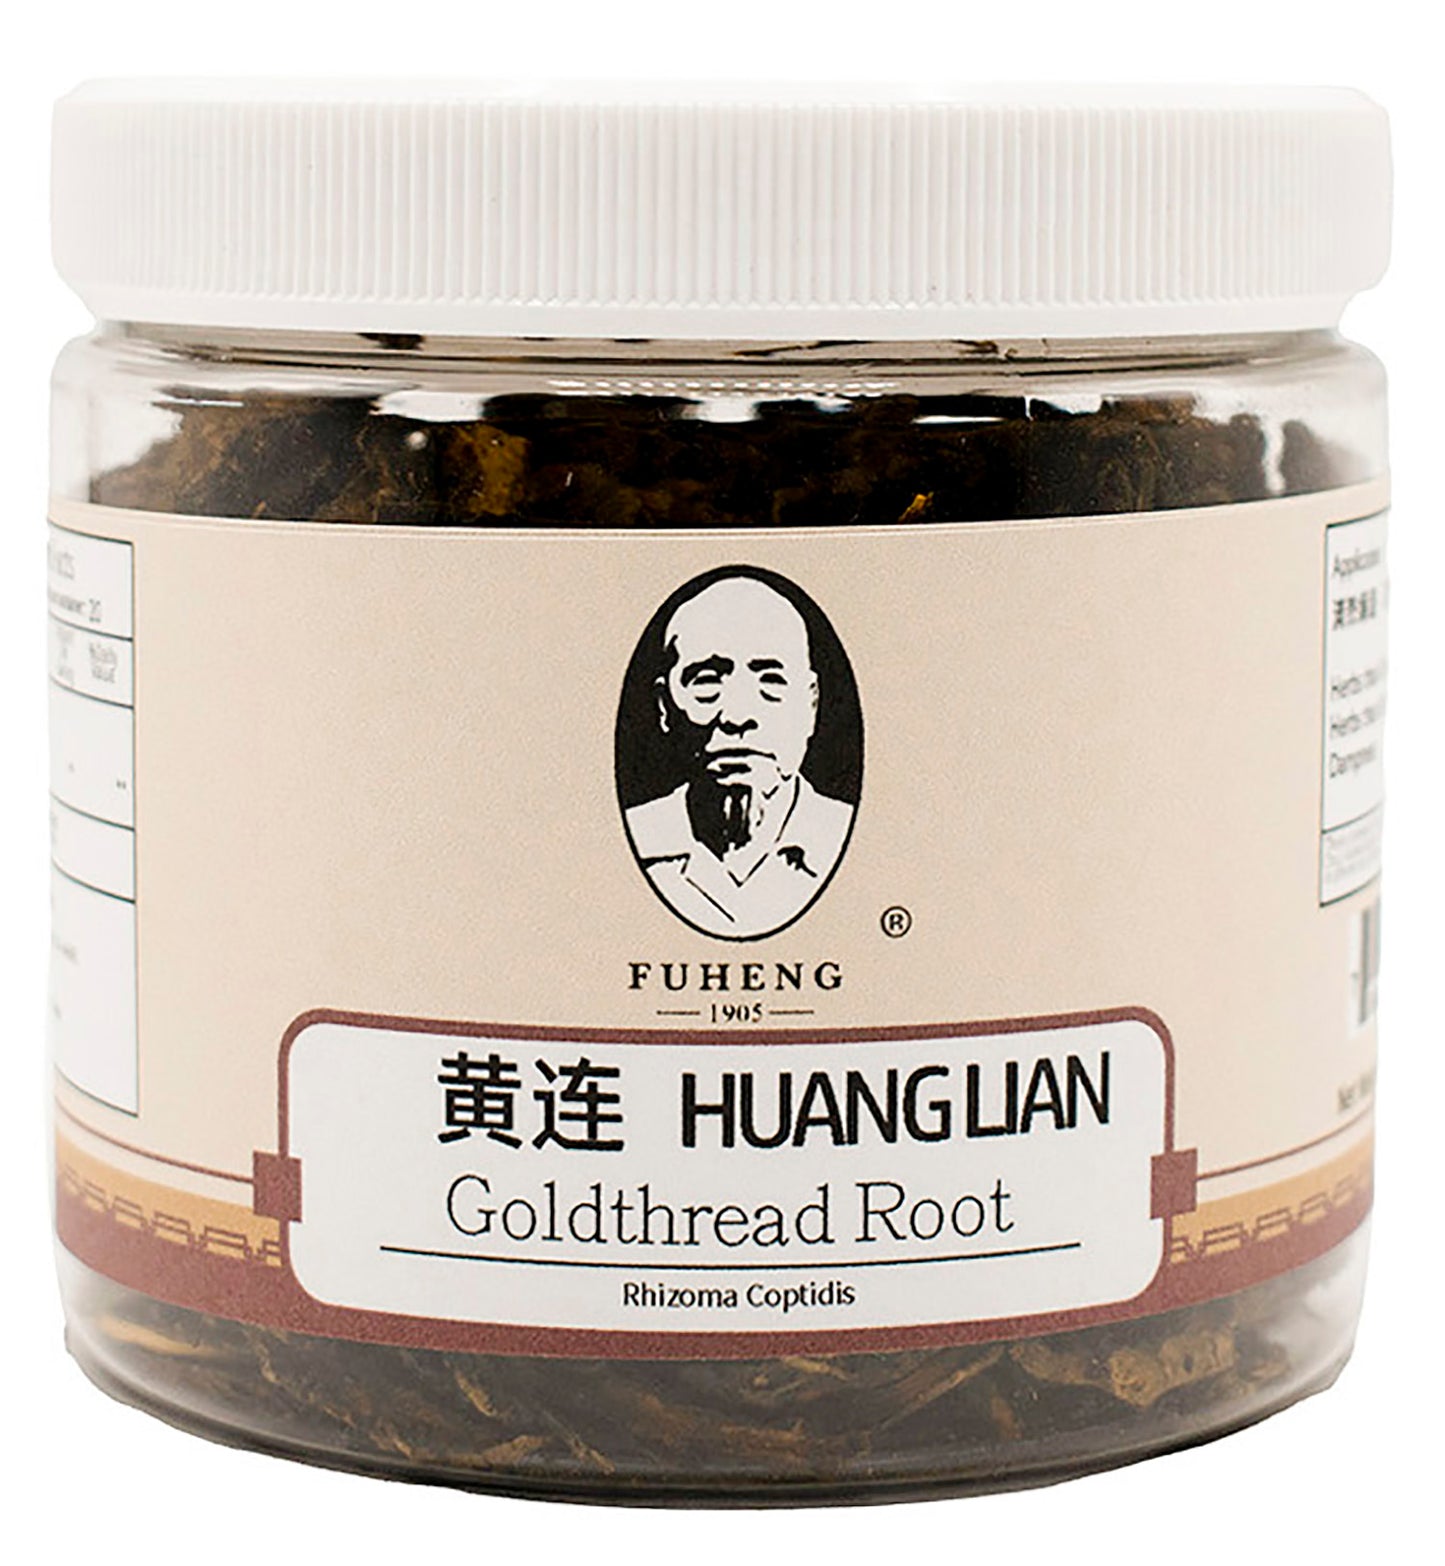 HUANG LIAN - 黄连 - Goldthread Root - FUHENG福恒 - Since 1905 - 50g